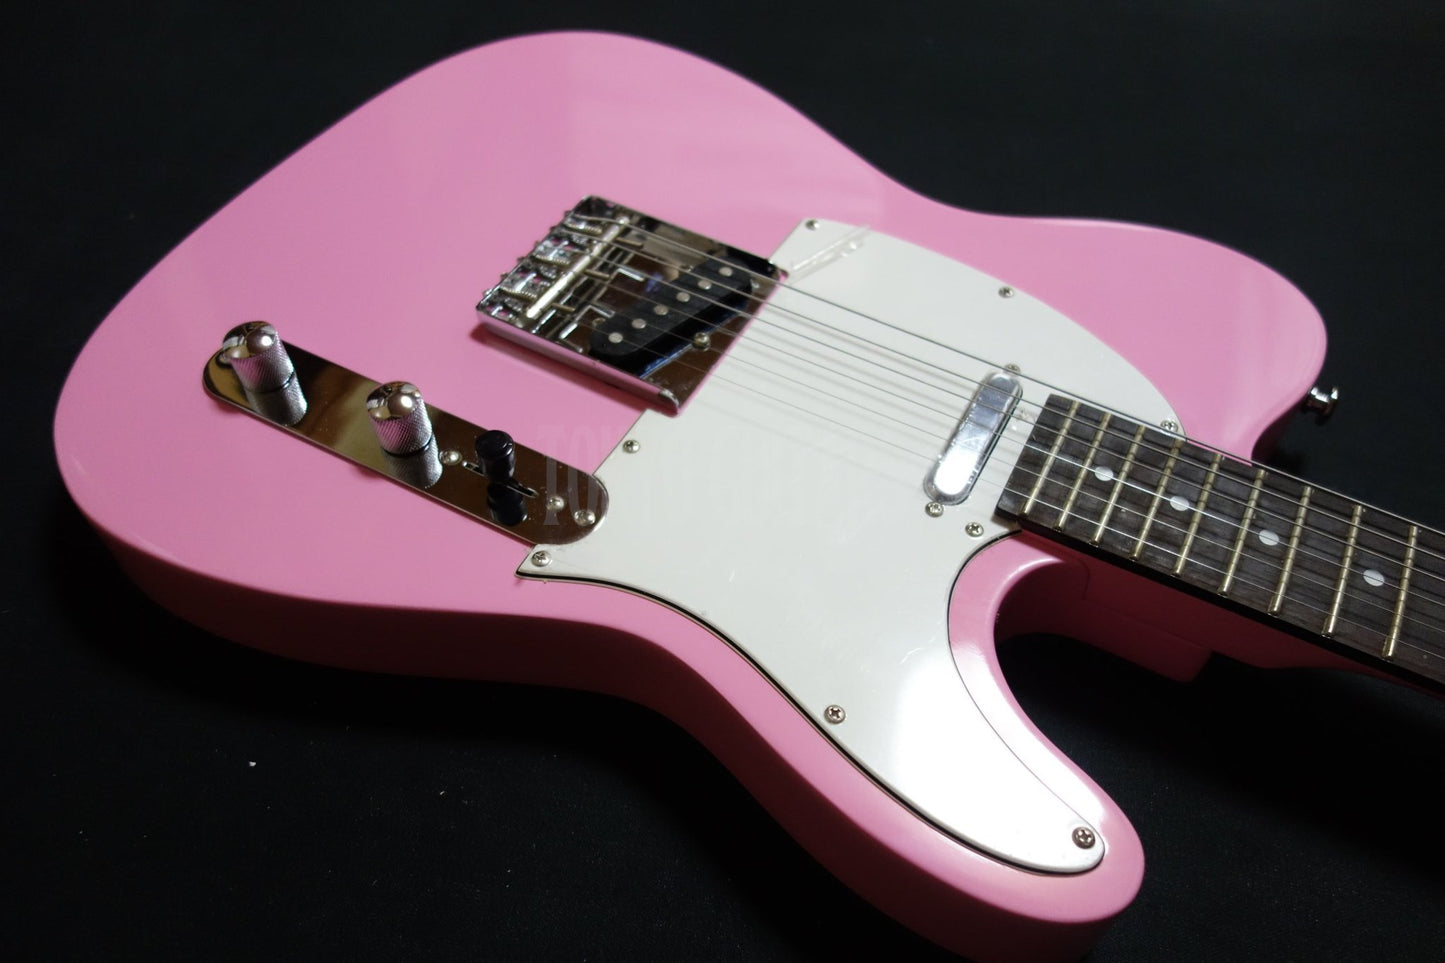 TL-300 (Solid Light Pink)